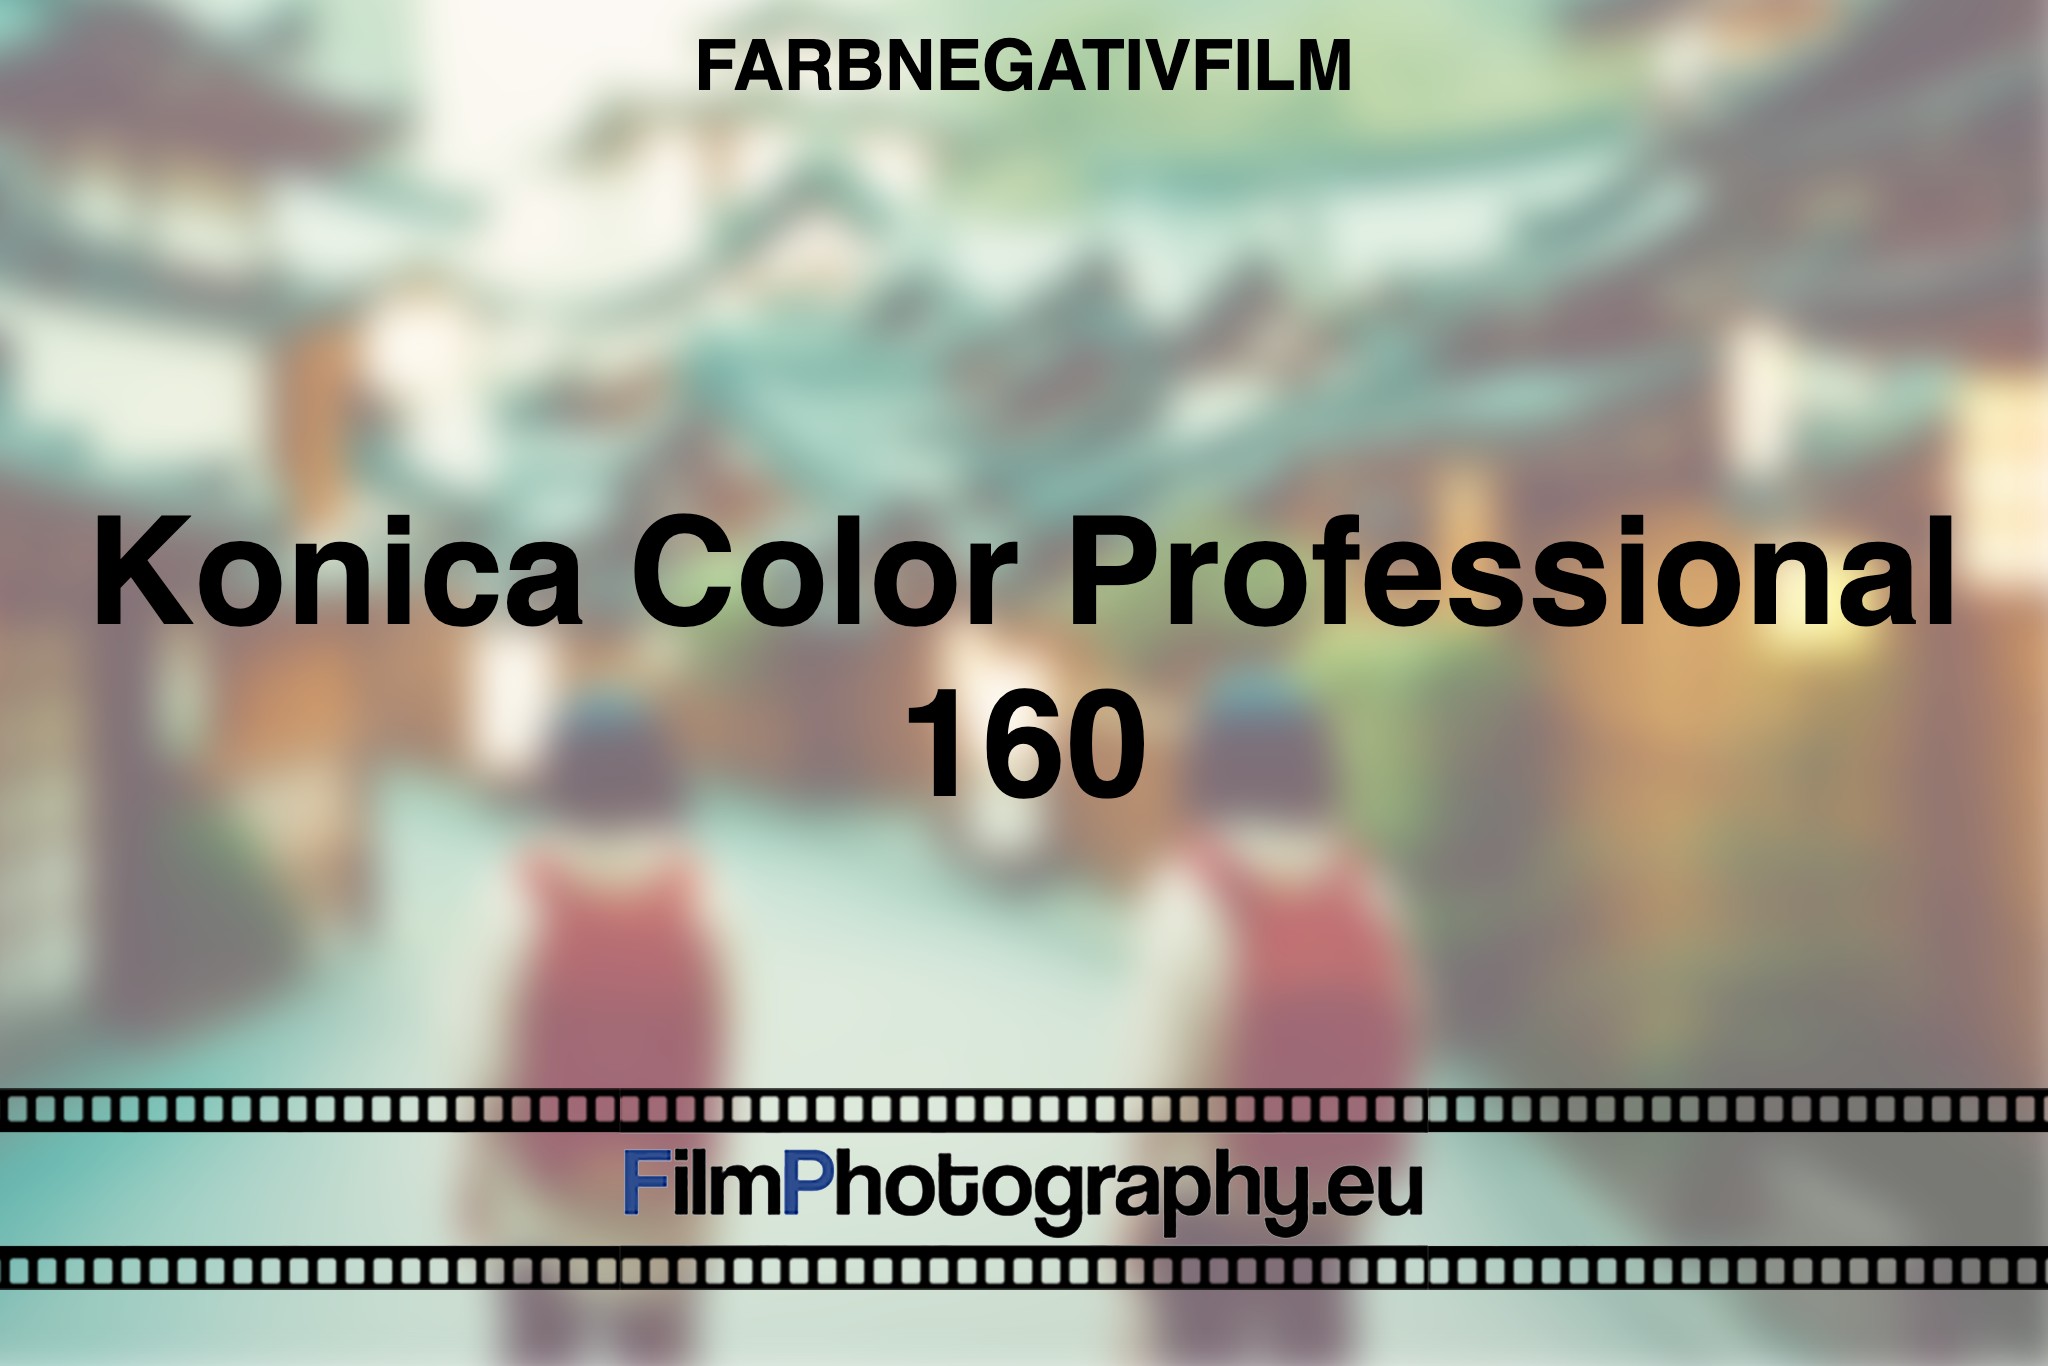 konica-color-professional-160-farbnegativfilm-bnv